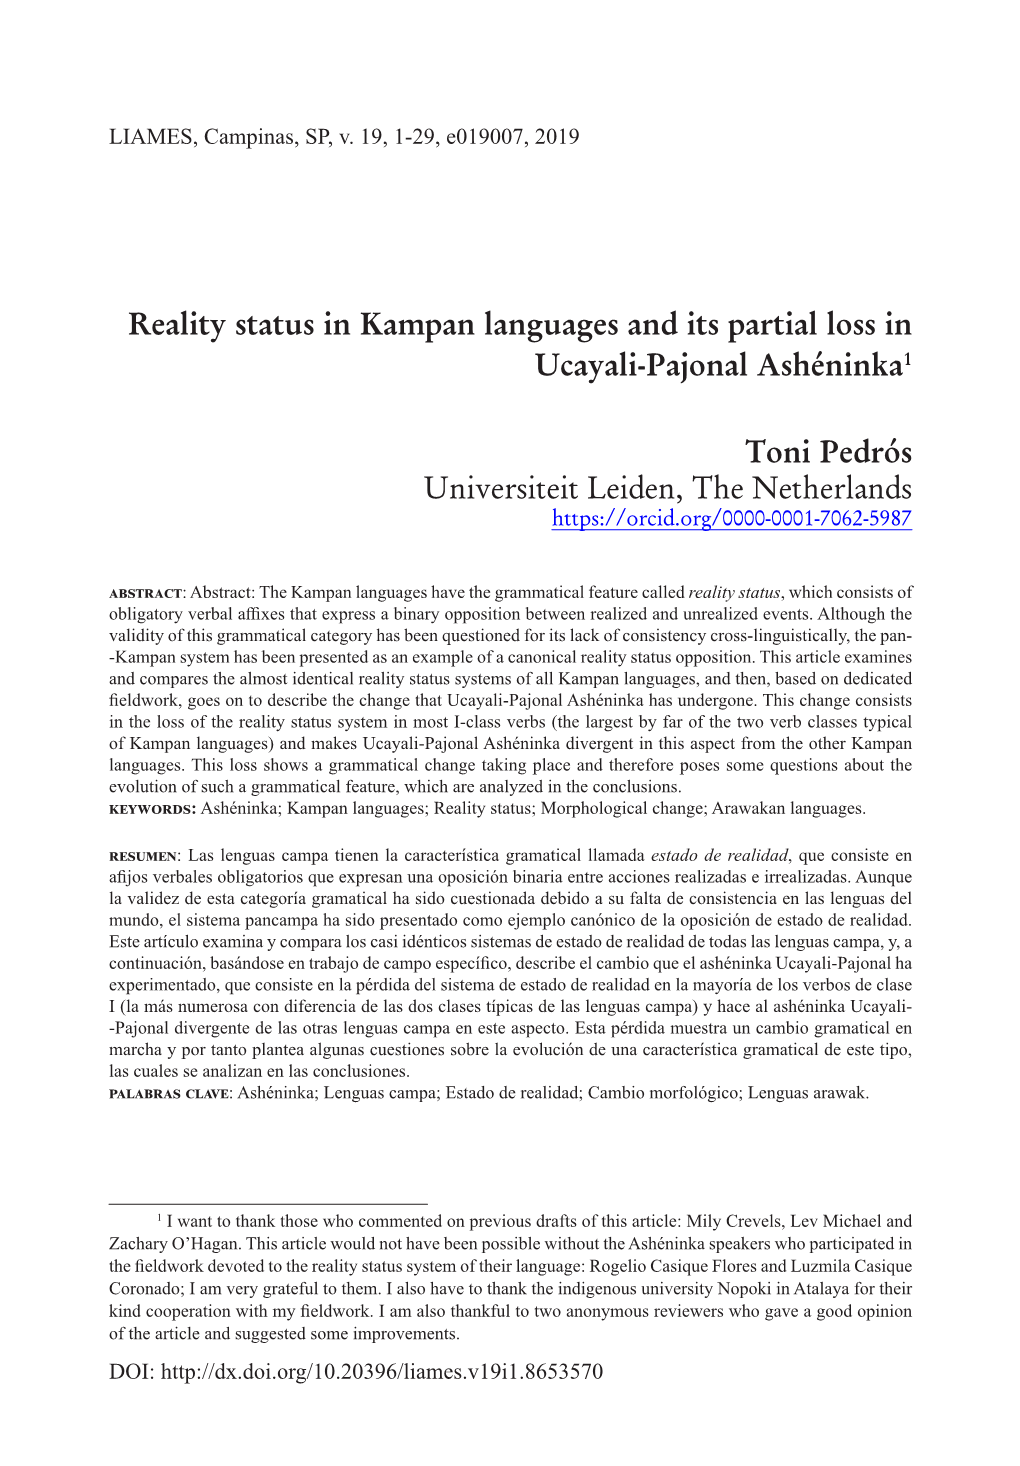 Reality Status in Kampan Languages and Its Partial Loss in Ucayali-Pajonal Ashéninka1